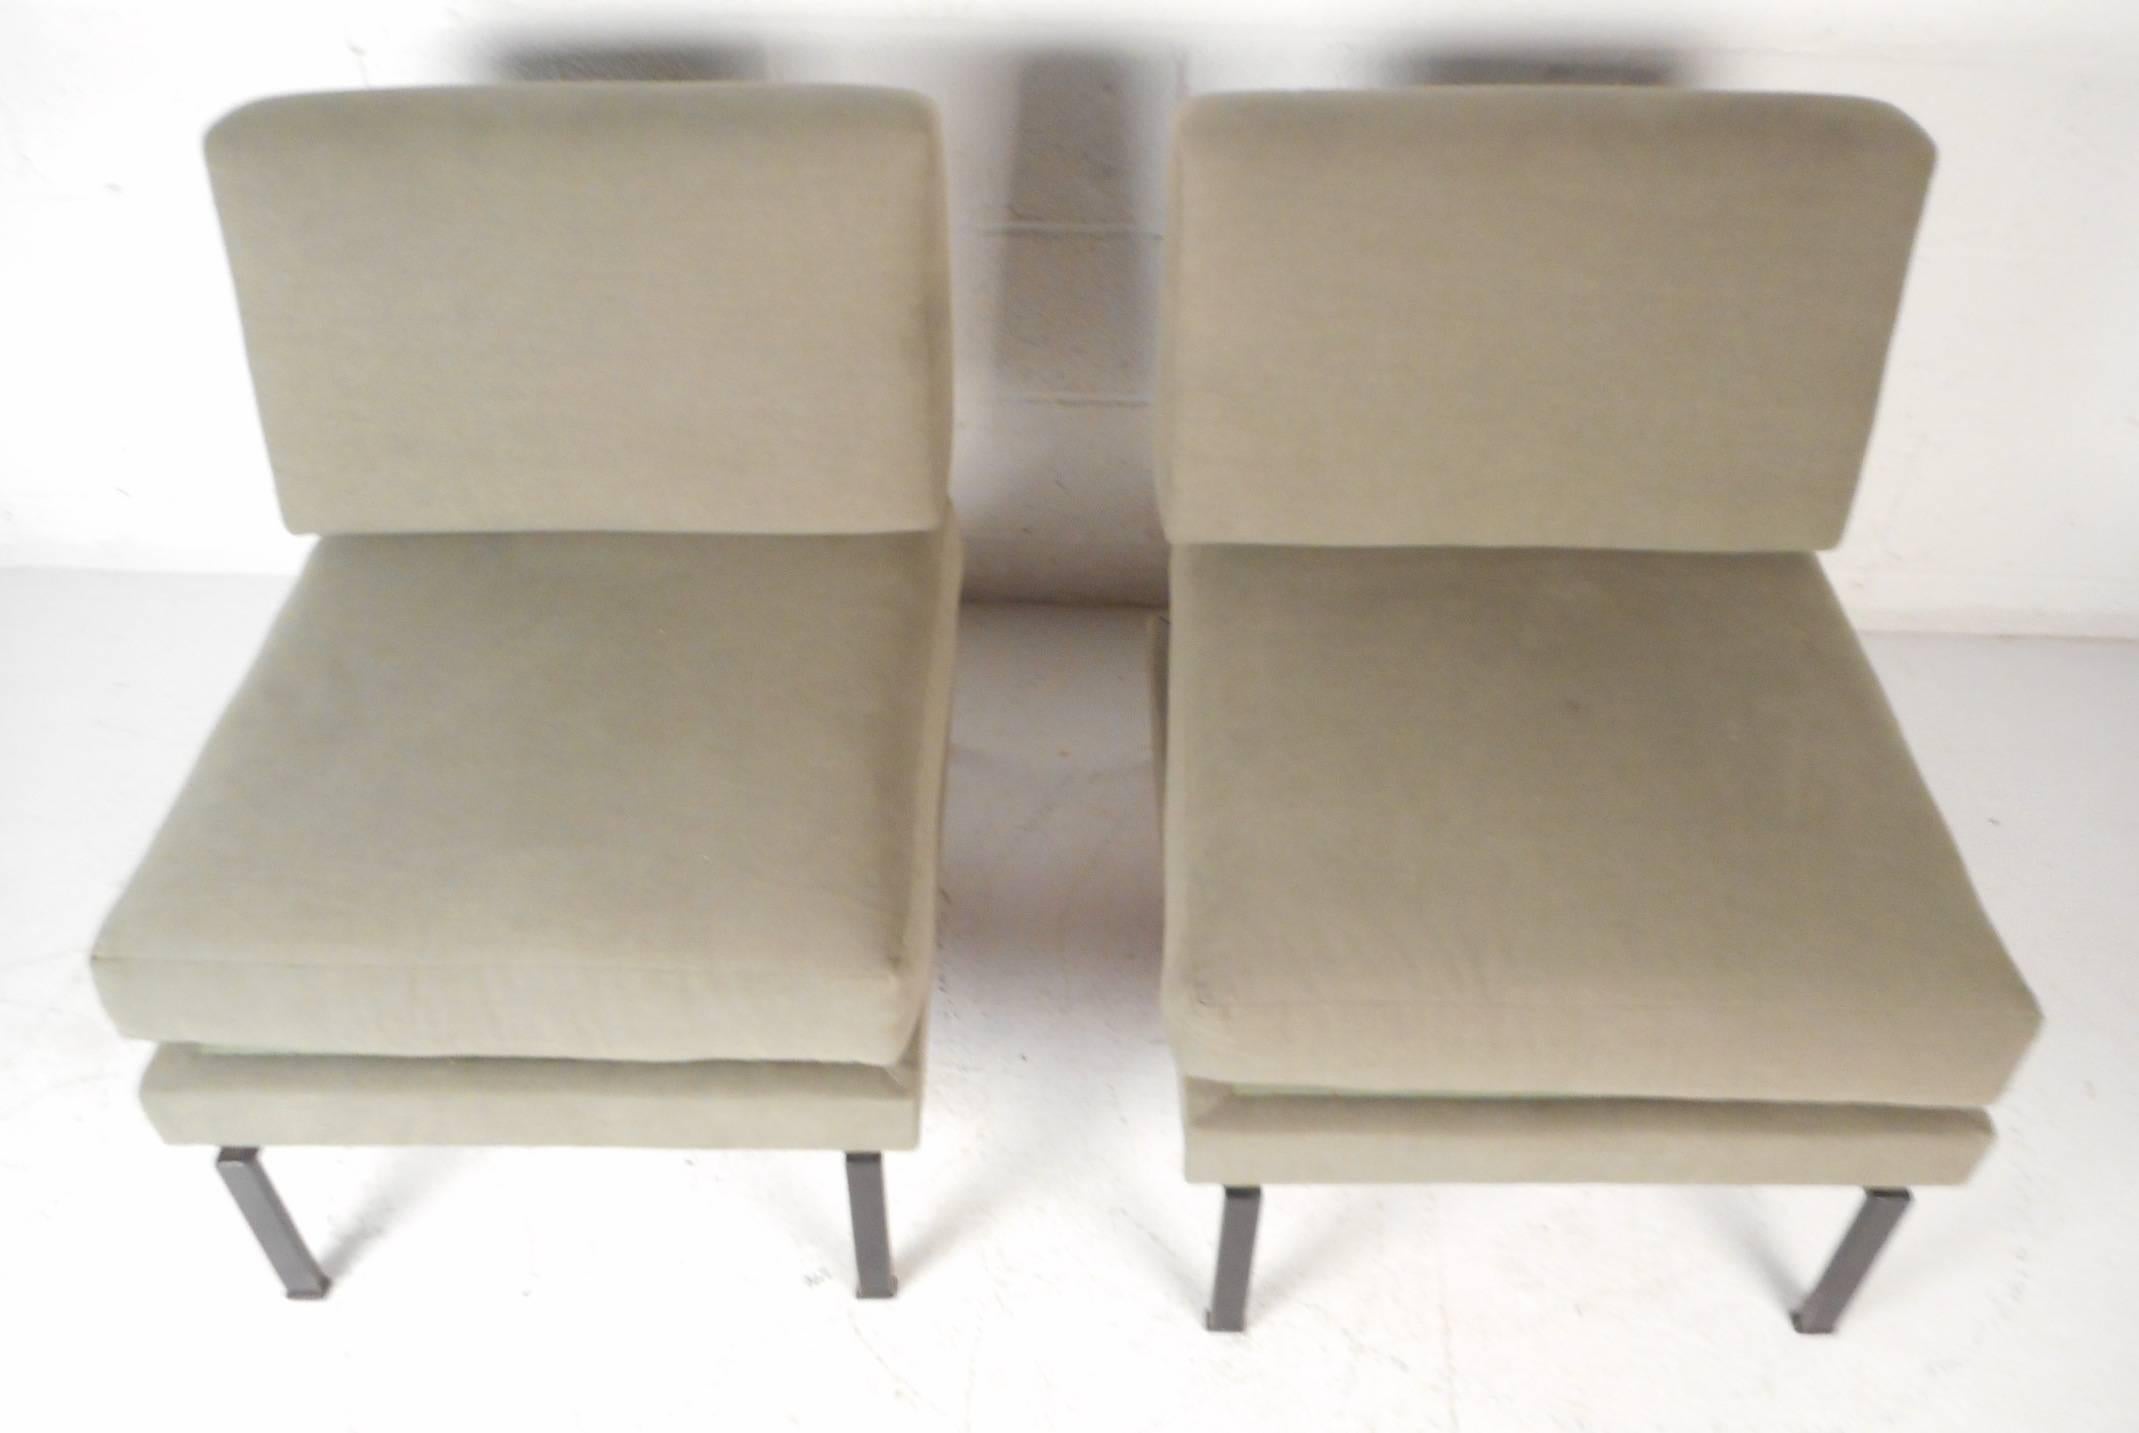 Pair of Mid-Century Modern Italian Trafilisa Lounge Chairs with Adjustable Seats 2